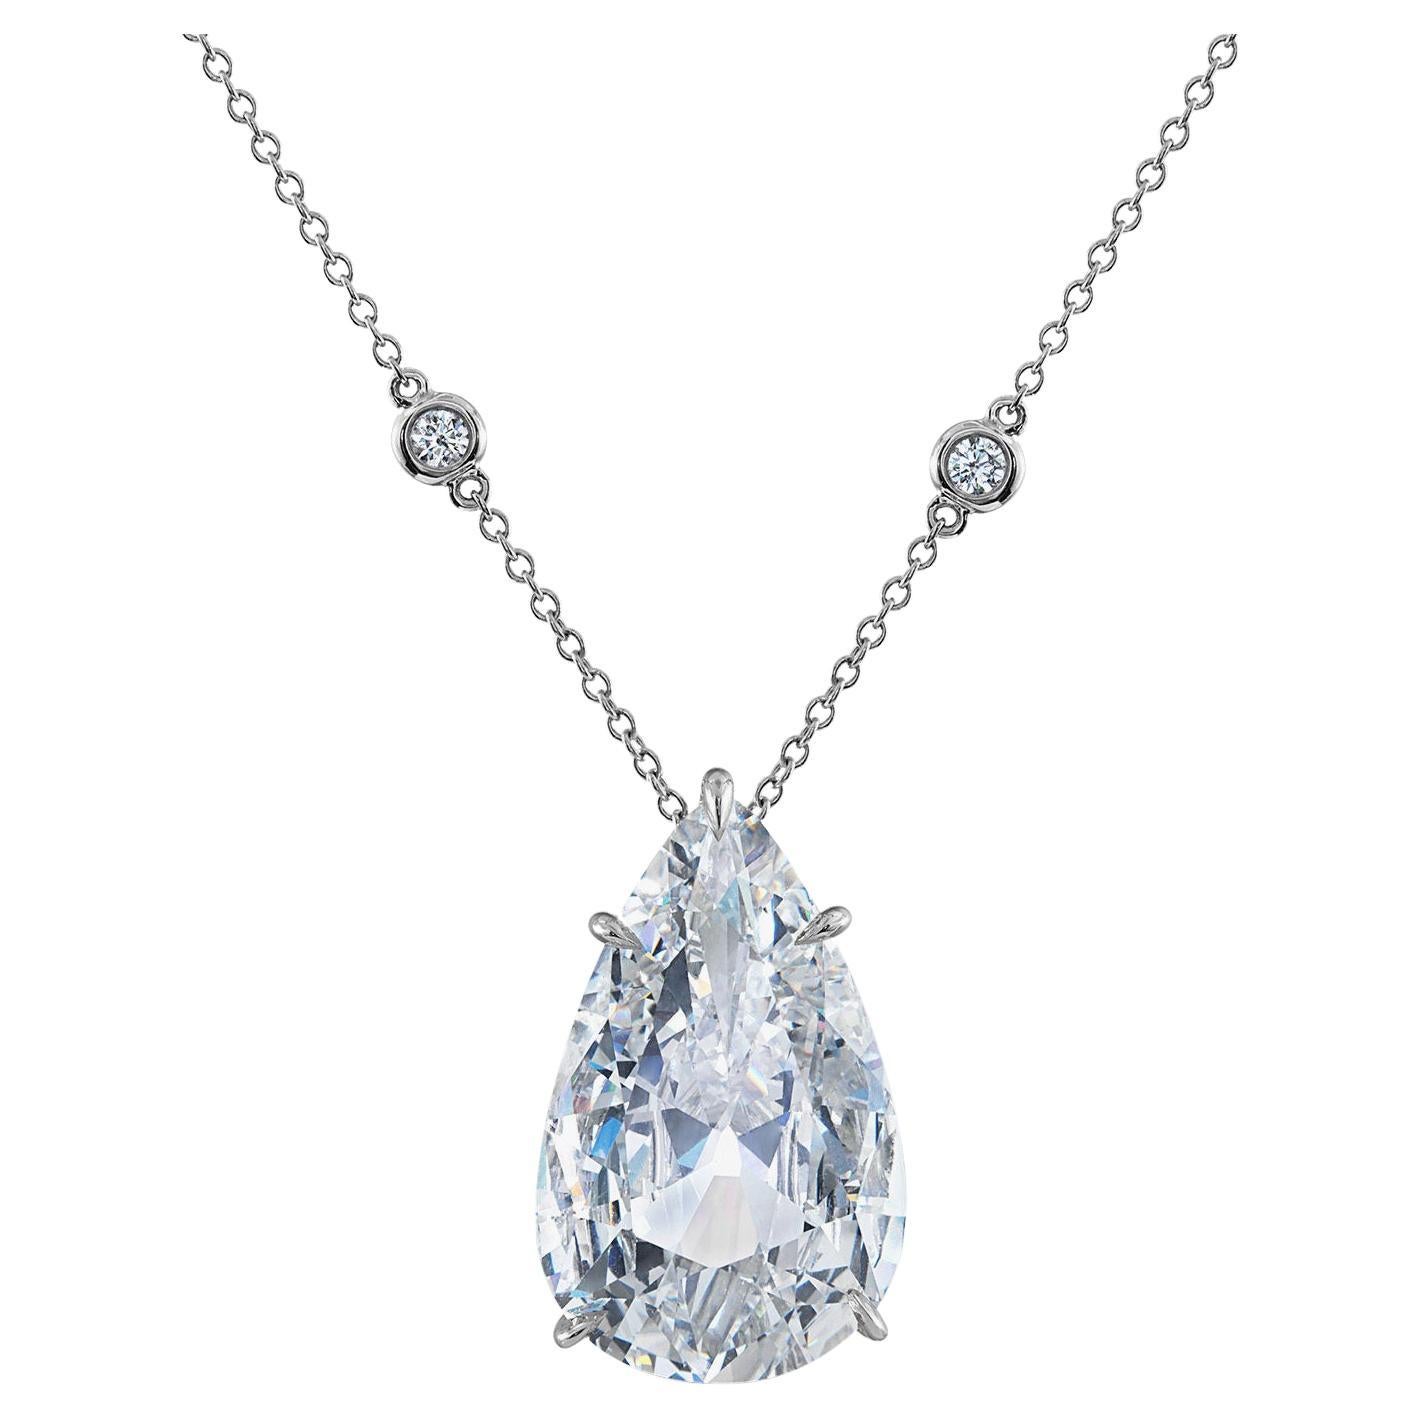 12.12 Carat Pear-Shaped Diamond Pendant, GIA Certified, Type IIa For Sale